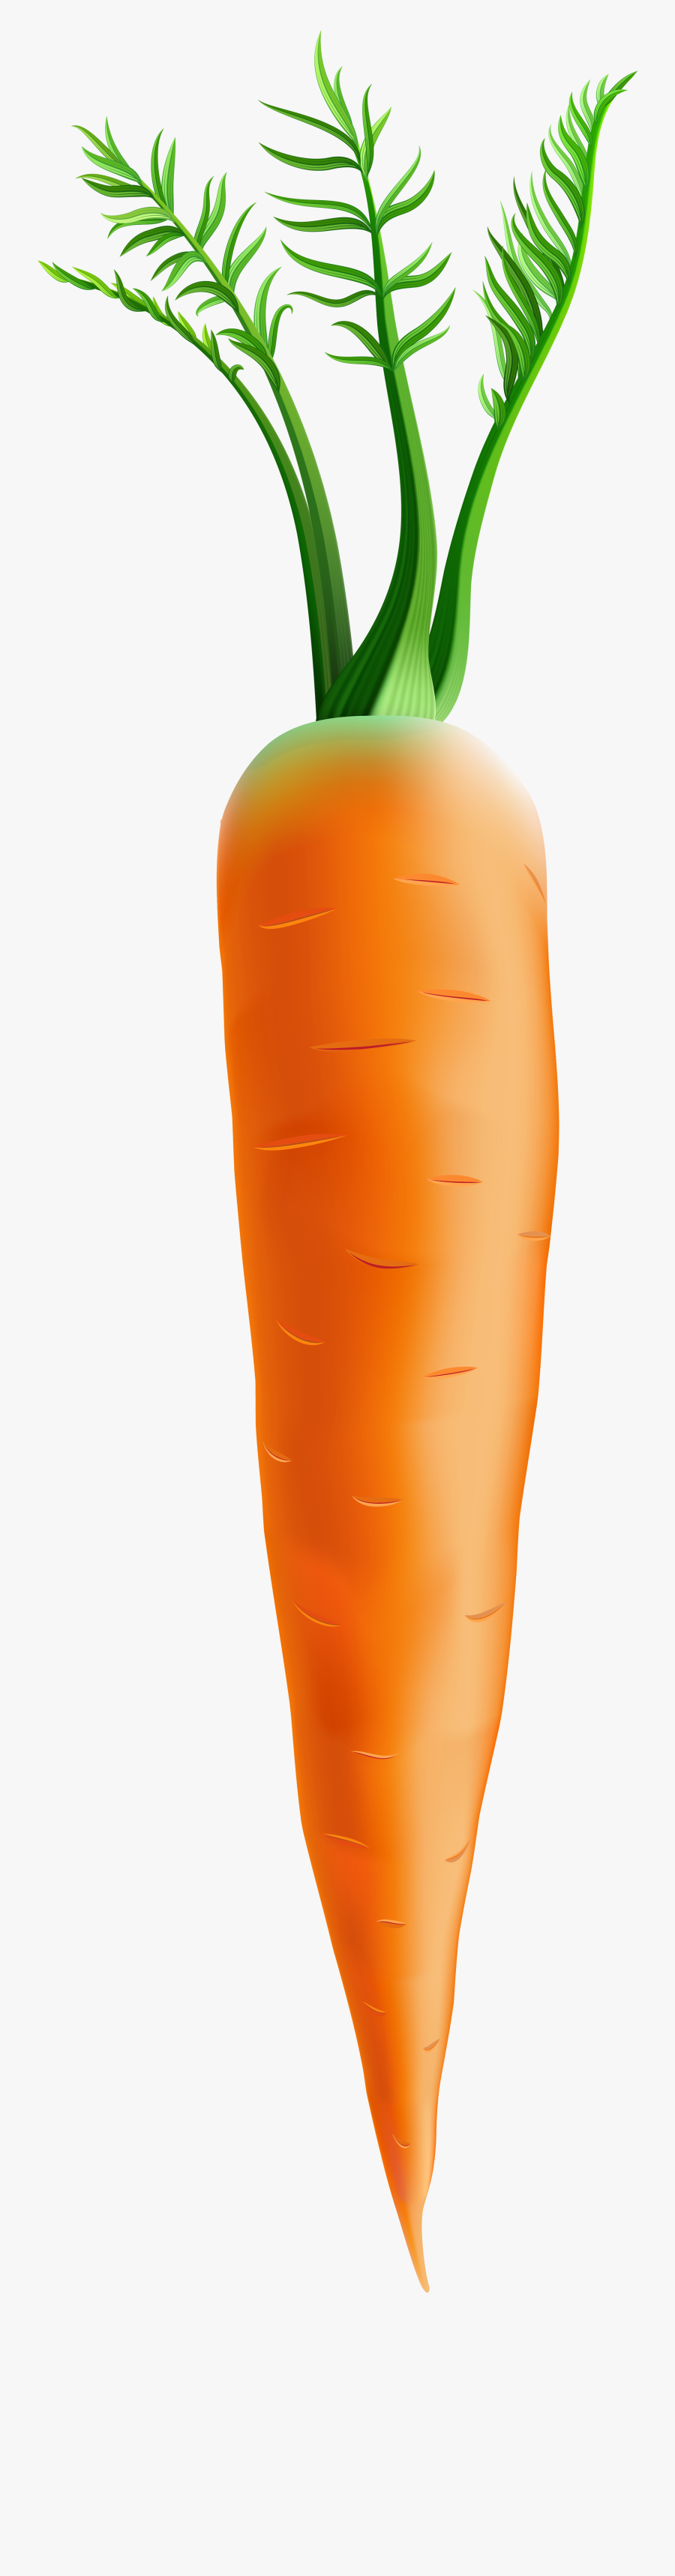 Carrot Clipart Png, Transparent Clipart